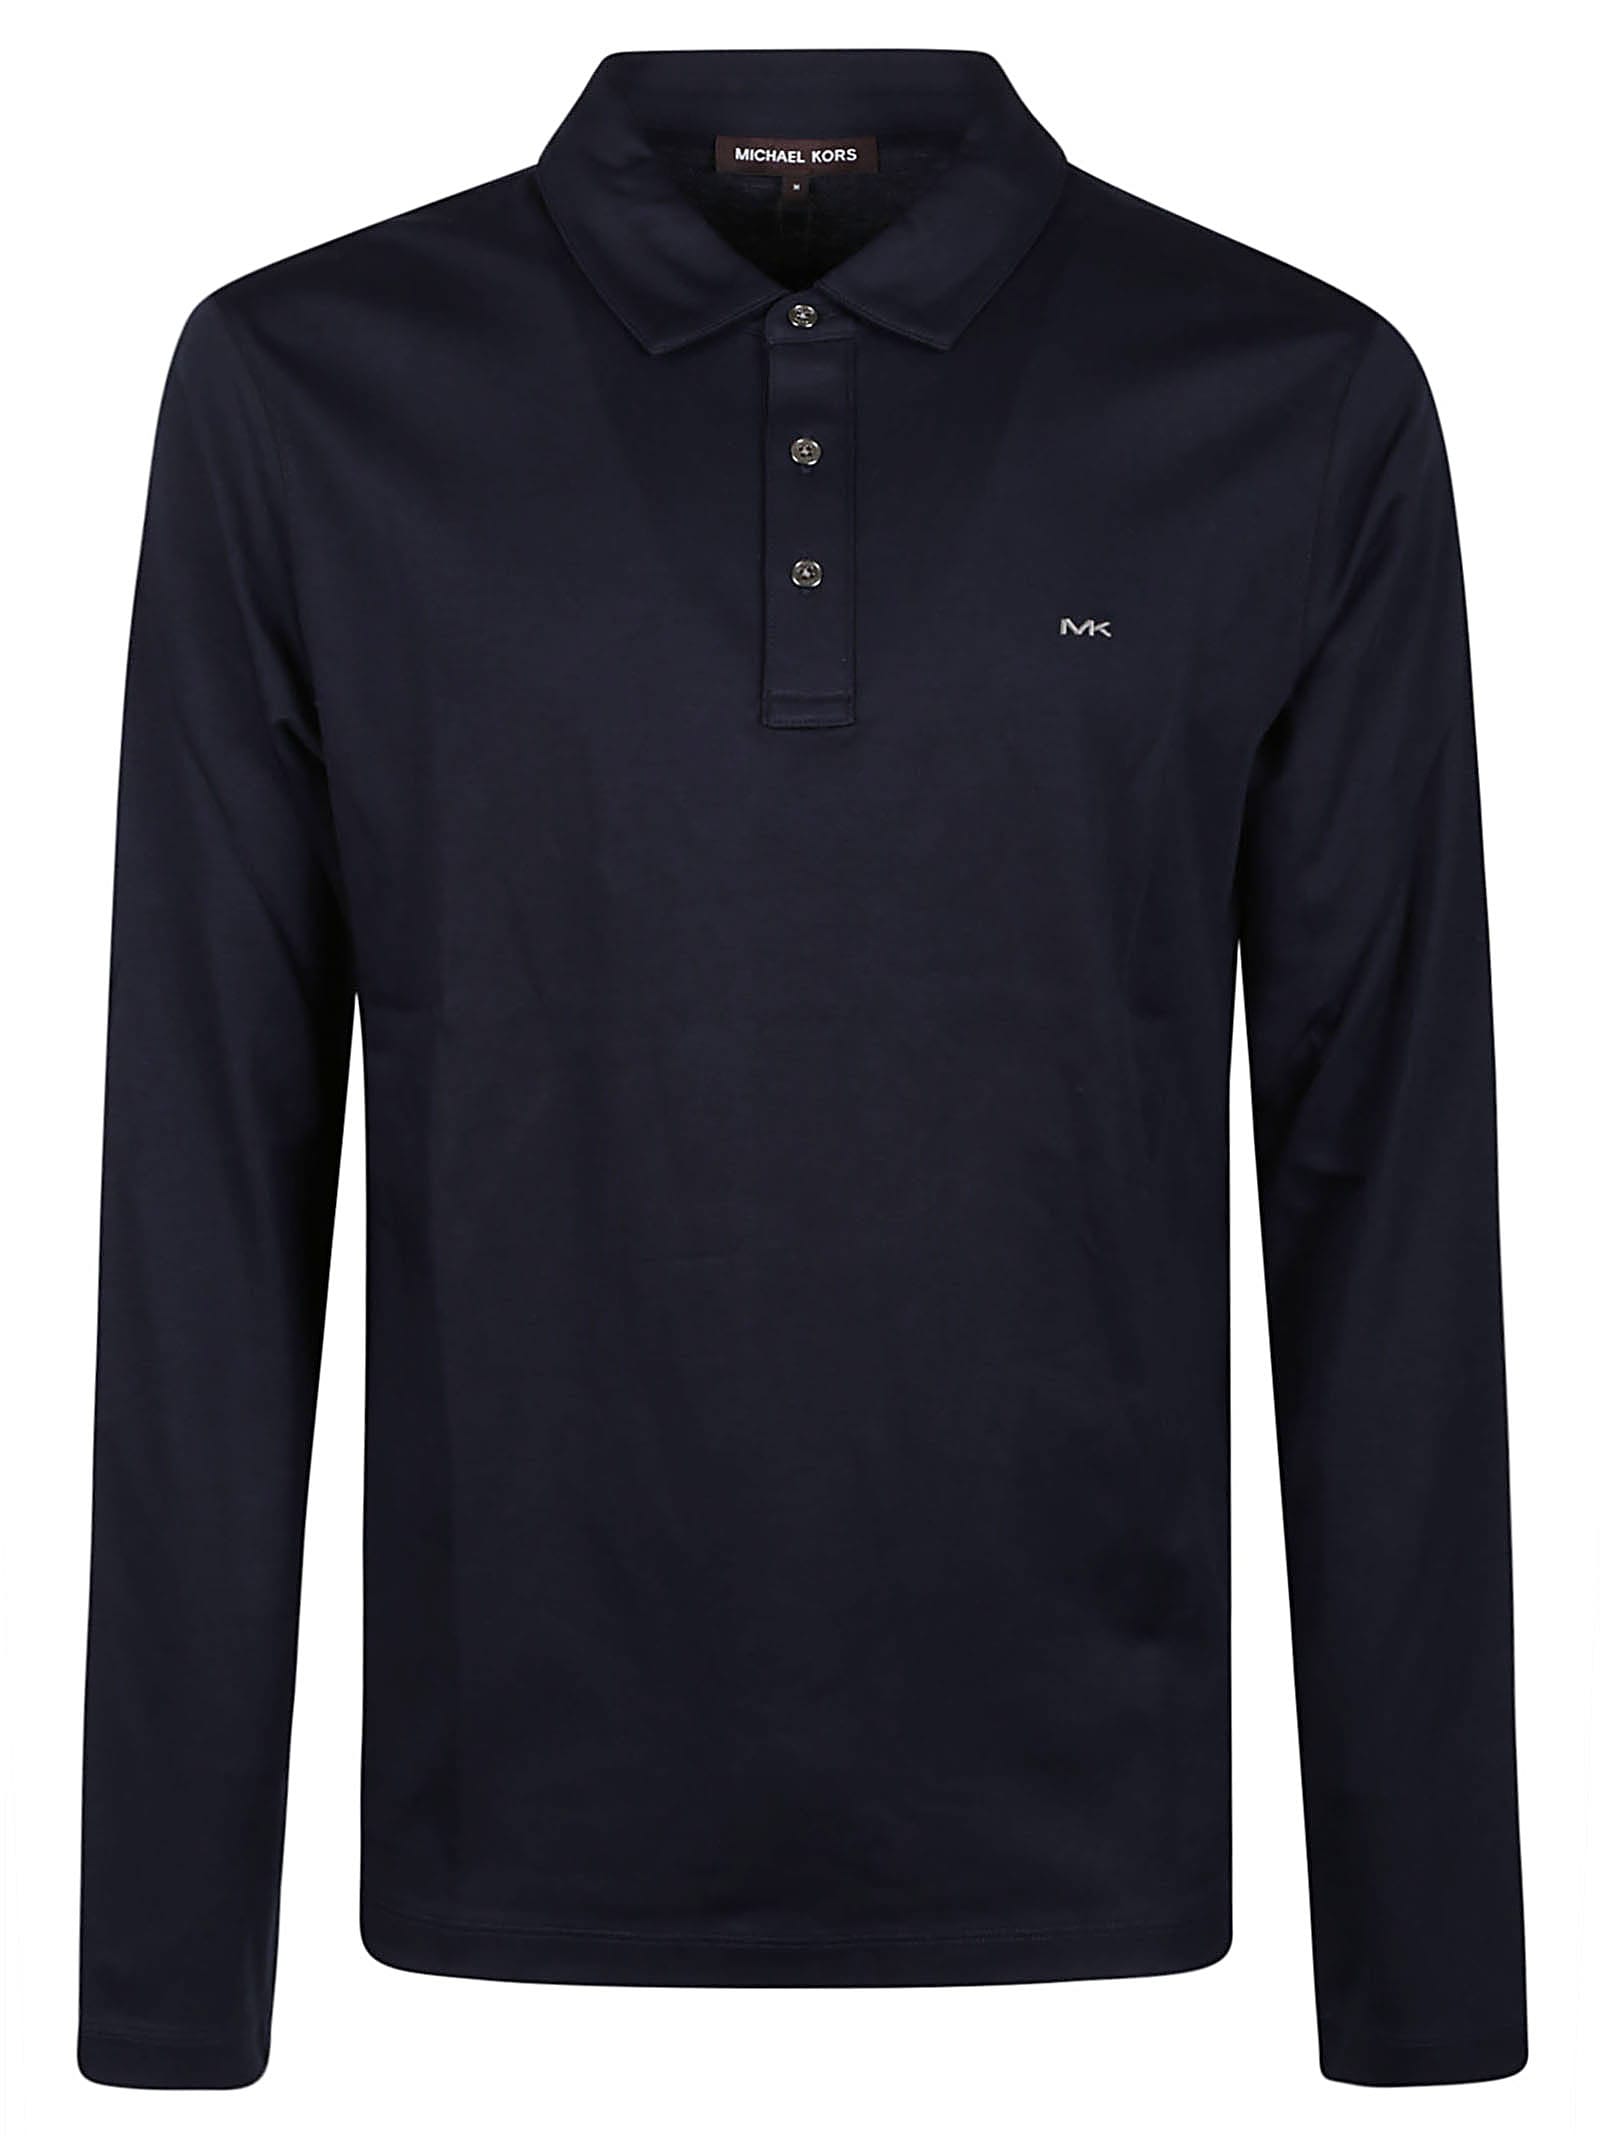 Michael Kors Long Sleeve Sleek Polo Shirt In Midnight